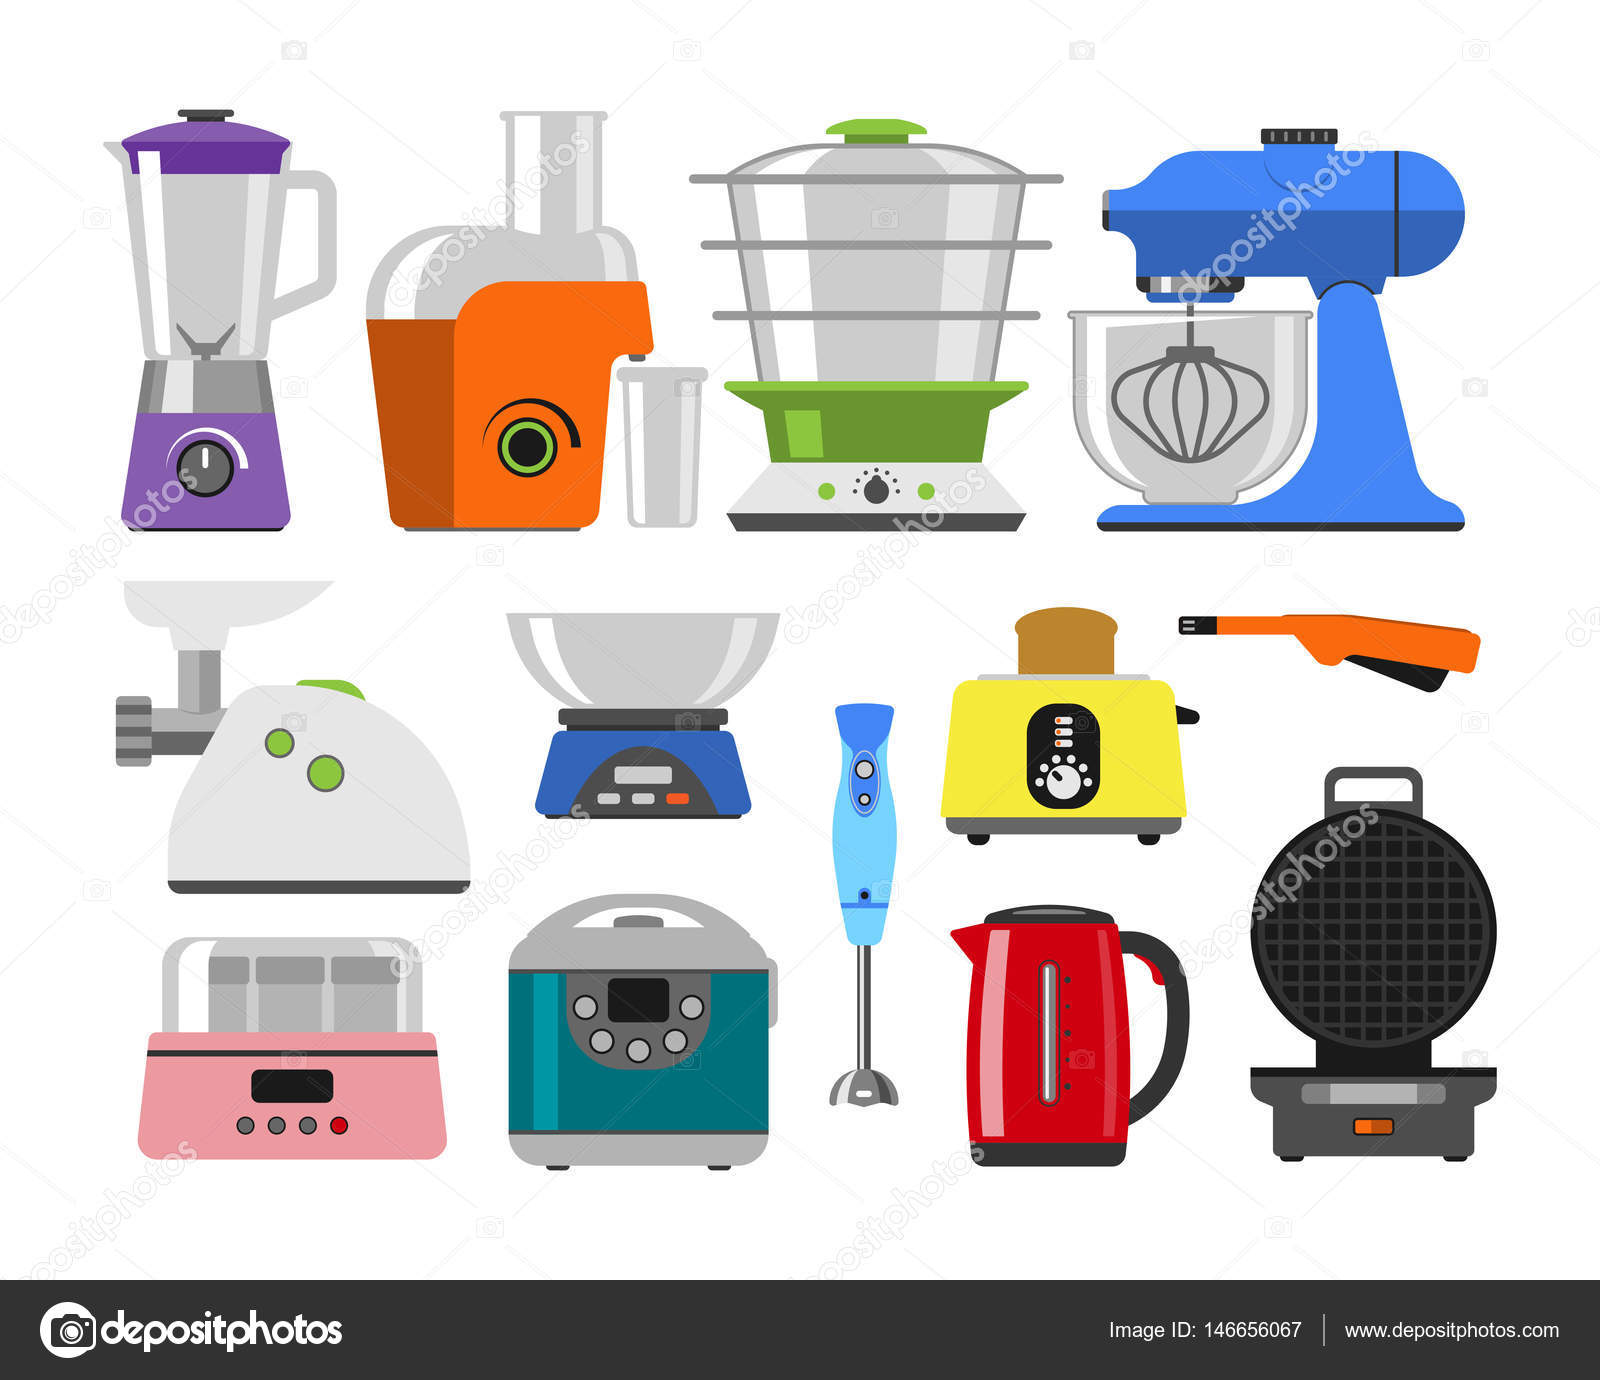 https://st3.depositphotos.com/8696740/14665/v/1600/depositphotos_146656067-stock-illustration-home-appliances-cooking-kitchen-home.jpg